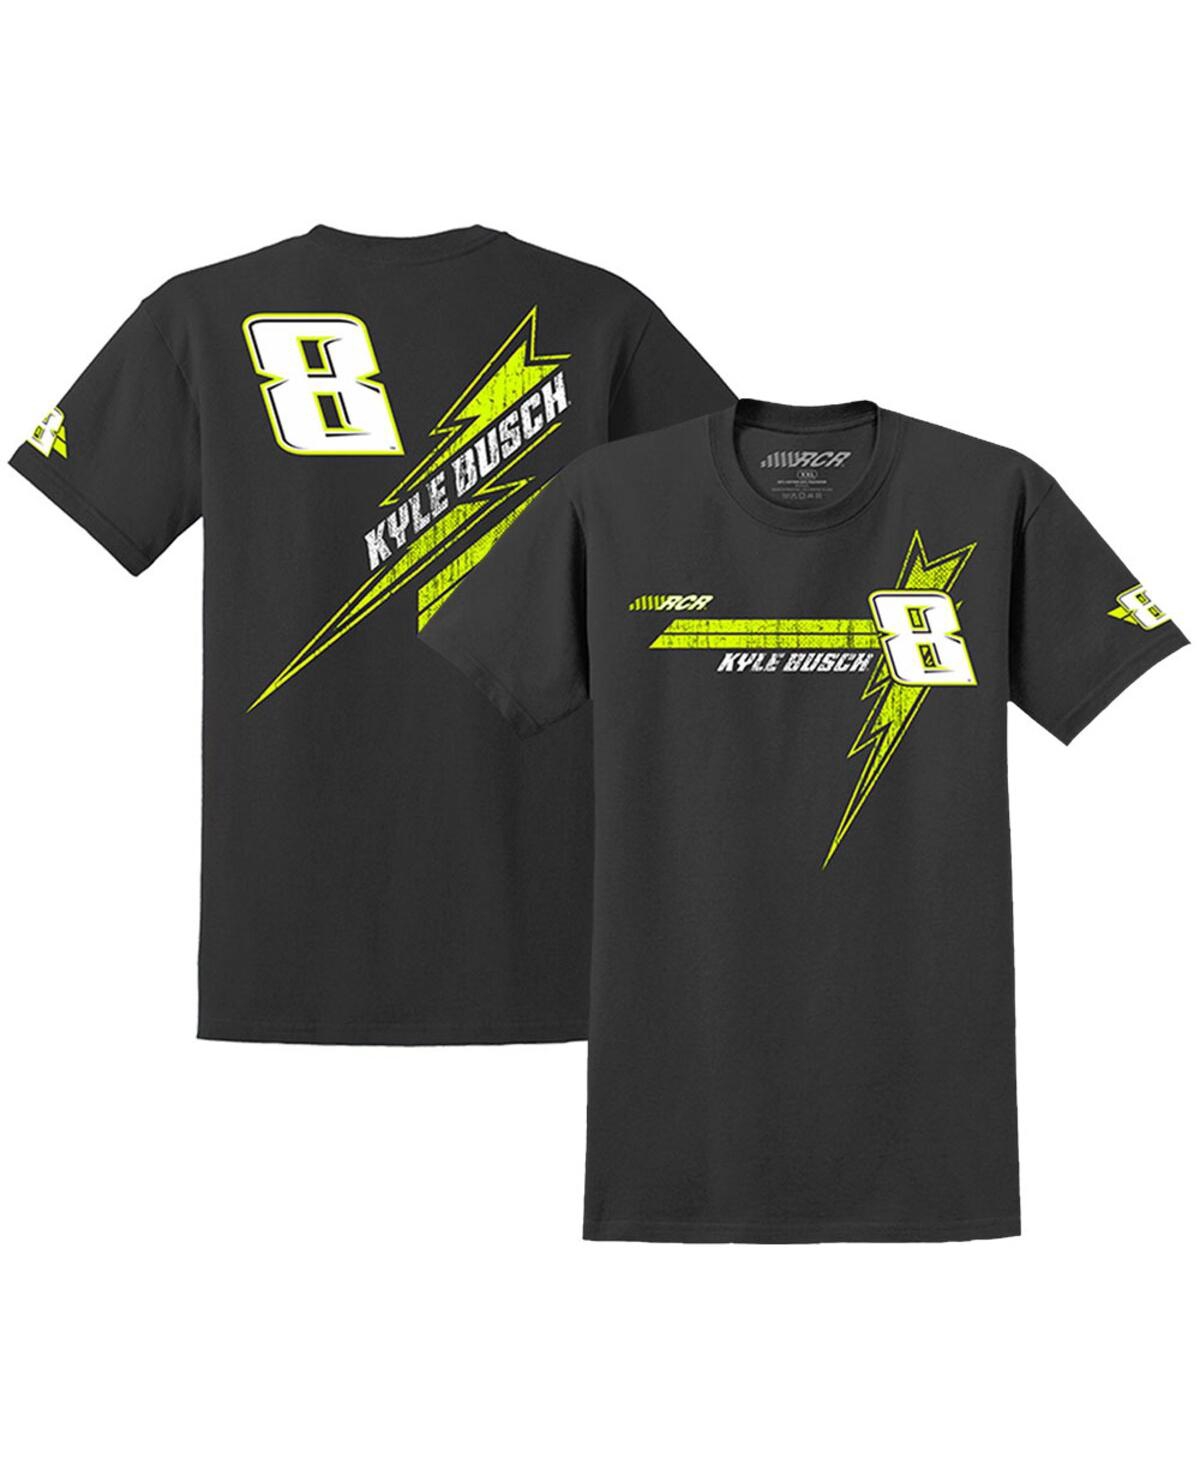 Men's Richard Childress Racing Team Collection Black Kyle Busch Lifestyle T-shirt - Black